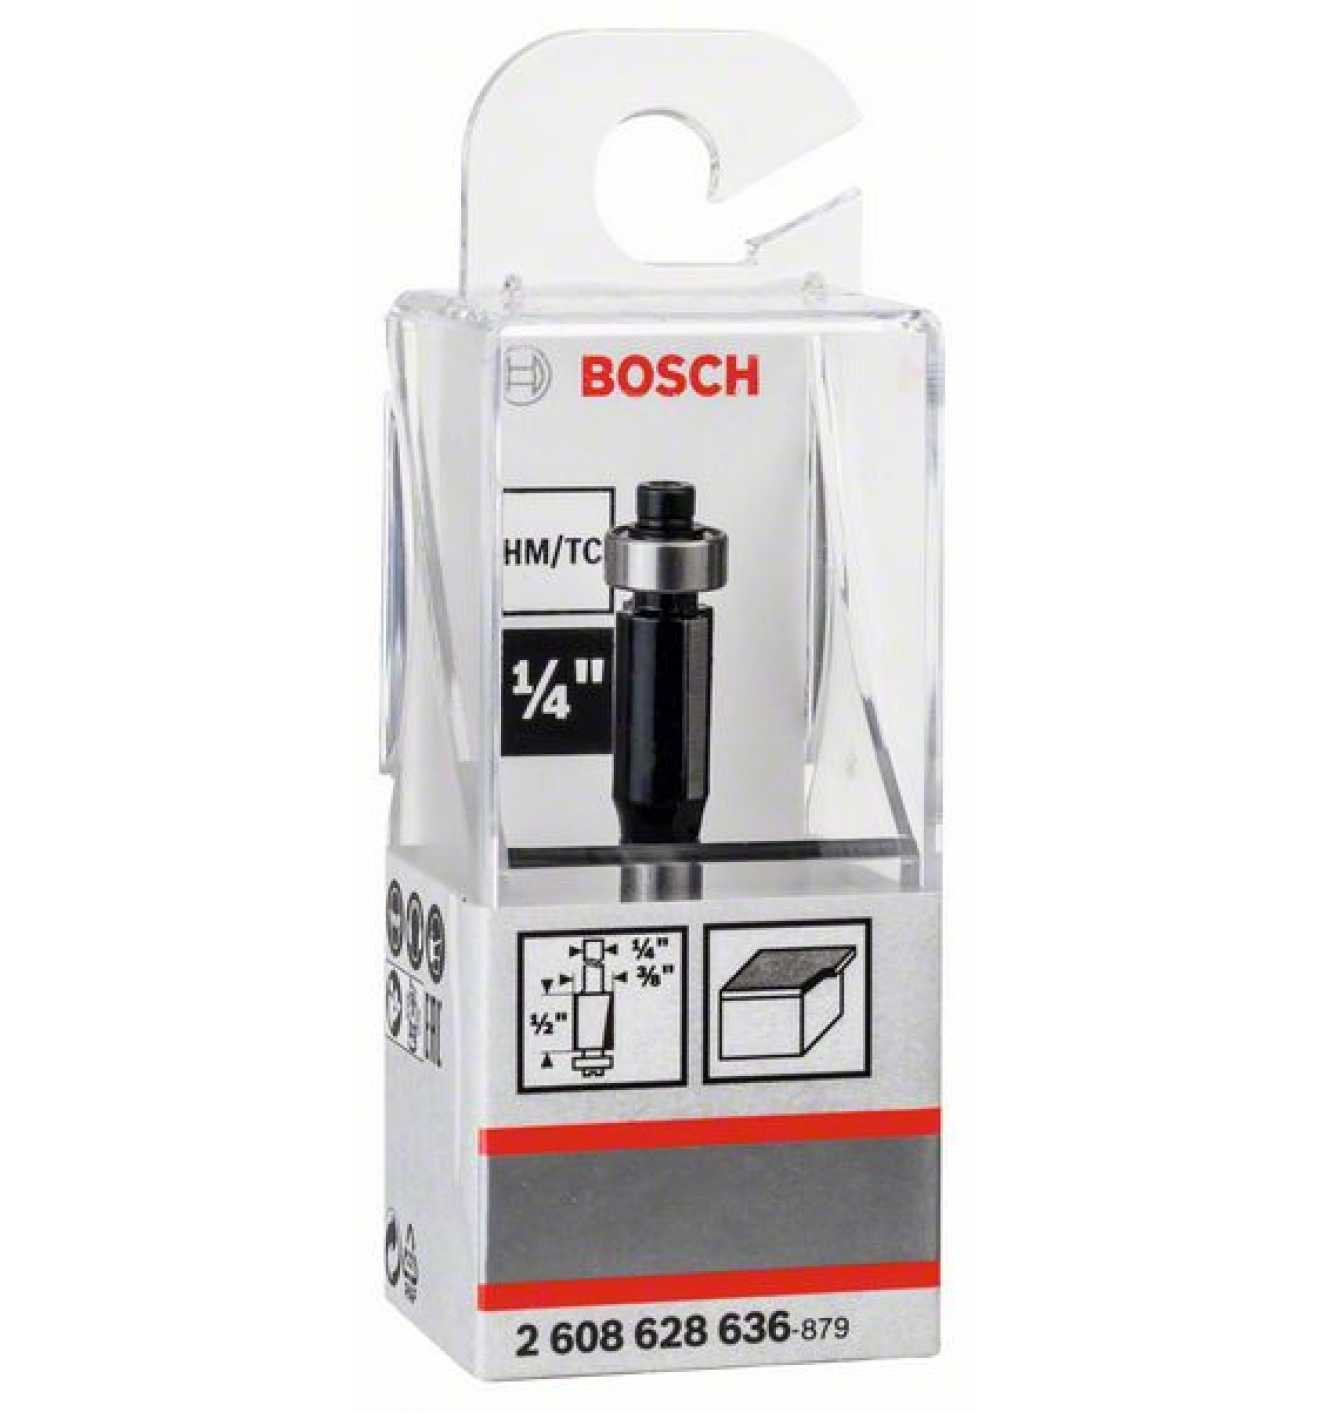 Bosch Laminate trim bit, 1/4", D1 9.5 mm, L 13.7 mm, G 56 mm 2608628636 Power Tool Services